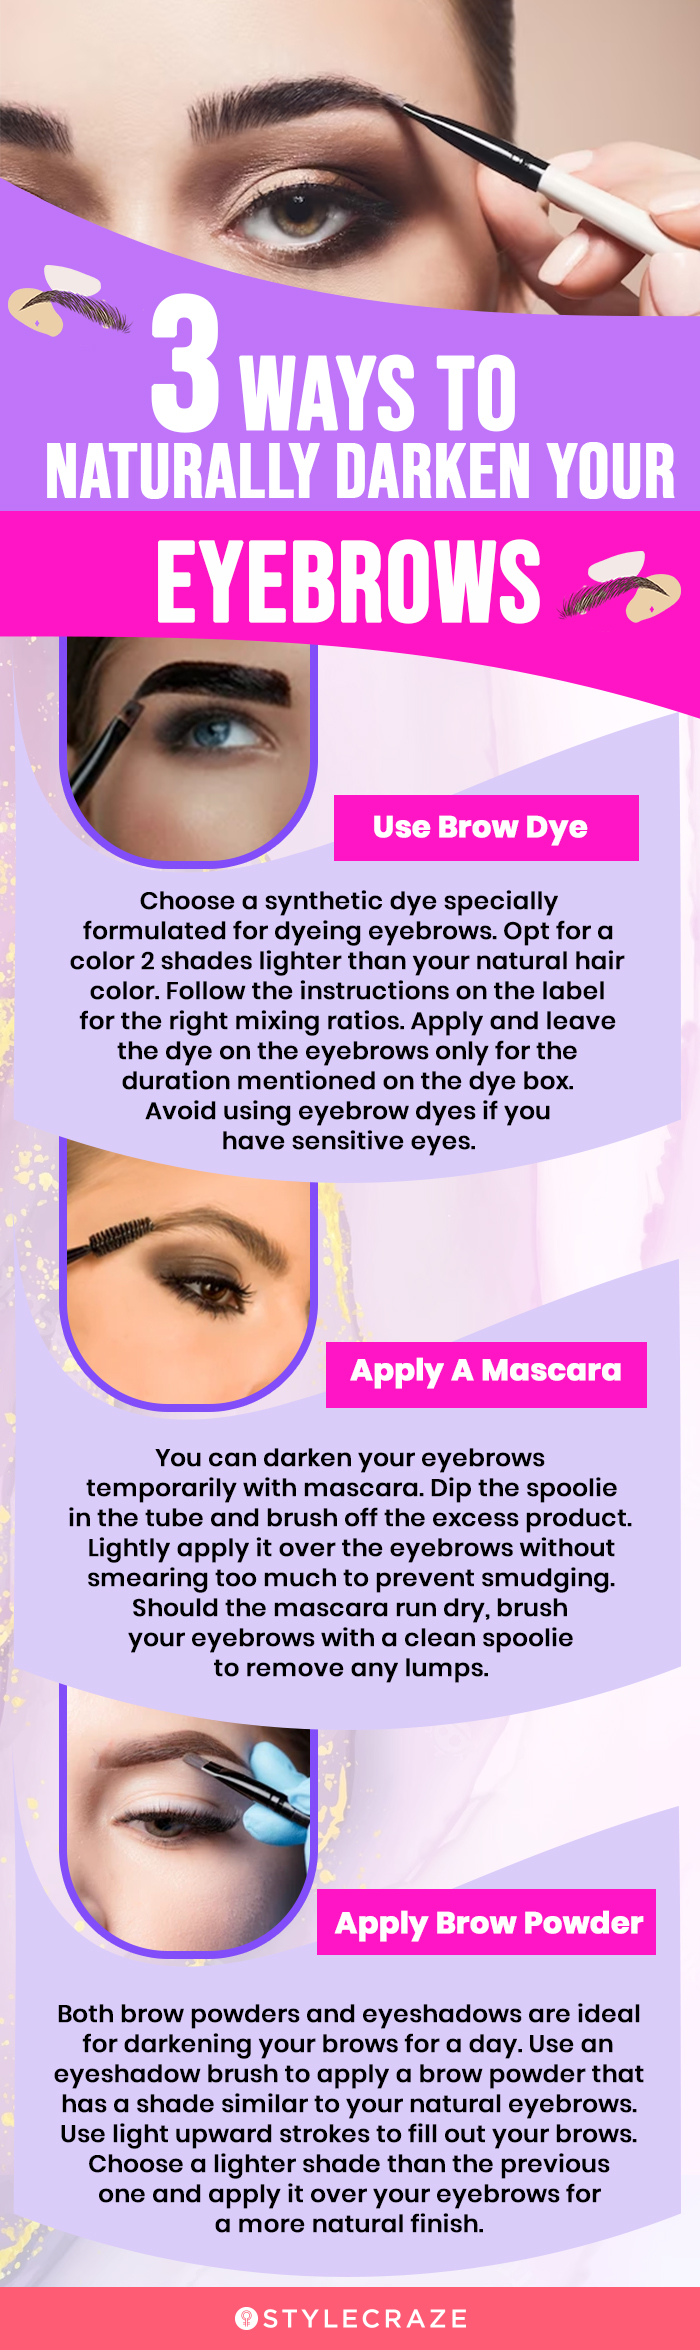 3 ways to naturally darken your eyebrows (infographic)